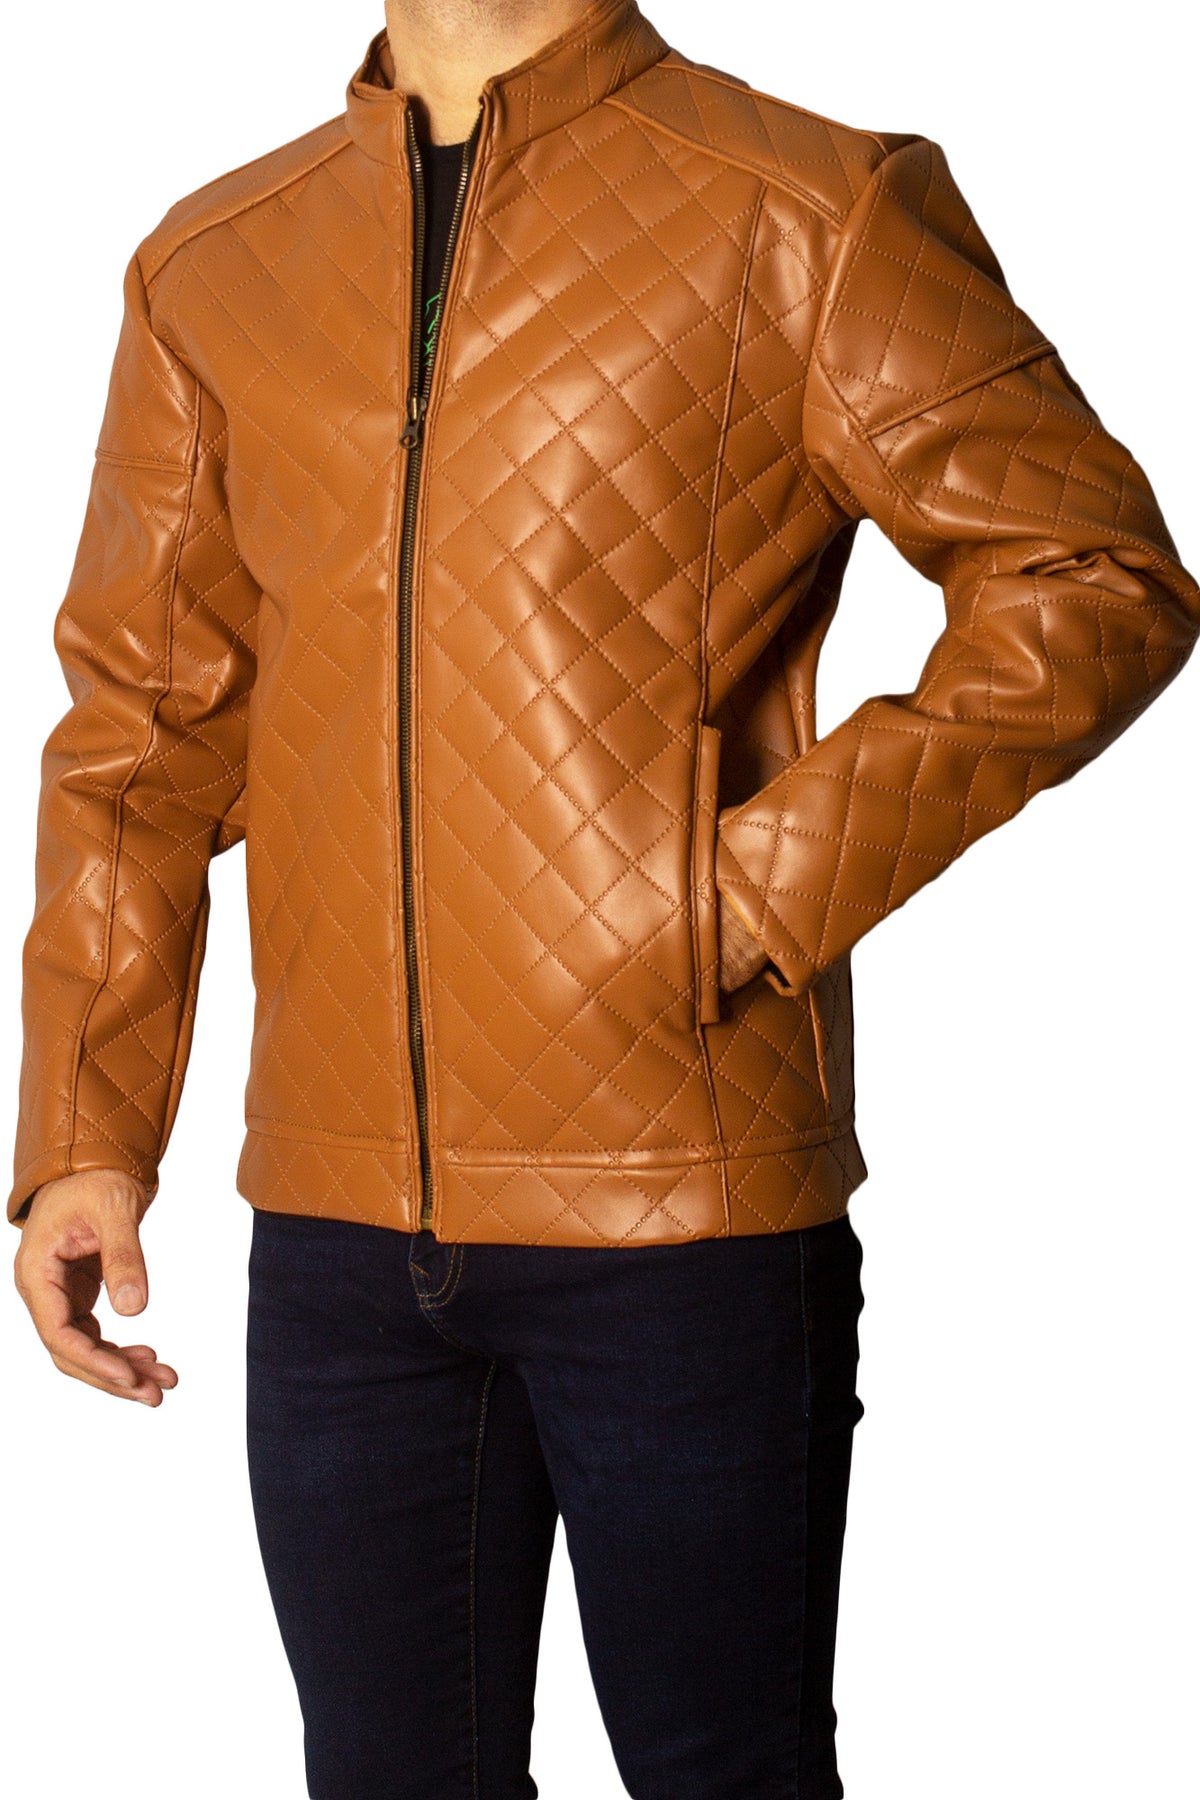 Men's Faux Leather Jacket Jk-0337 Camel